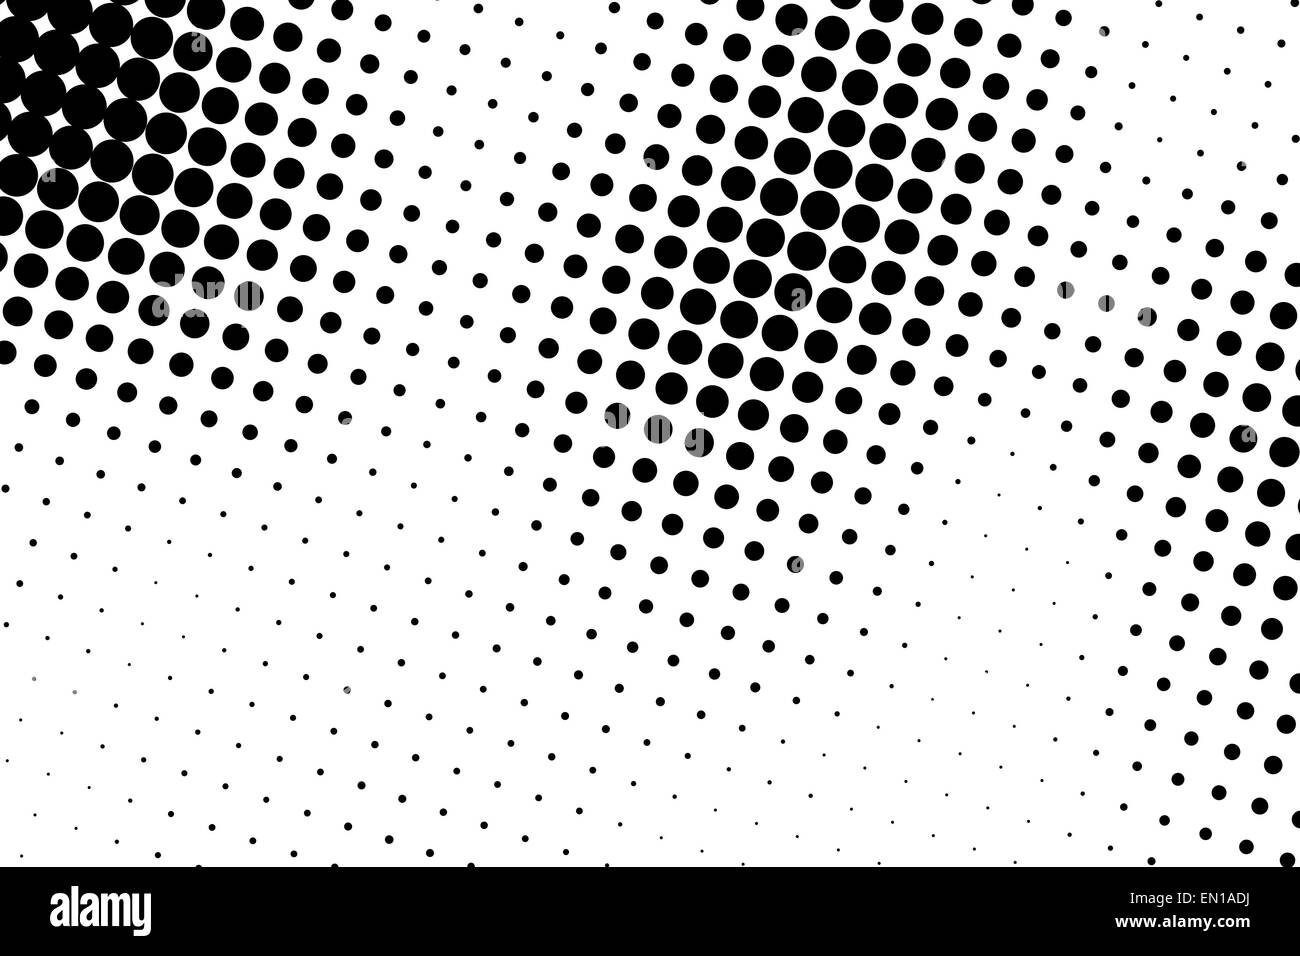 Halftone dots. Black and white dot background. Black dots on white  background Stock Photo - Alamy